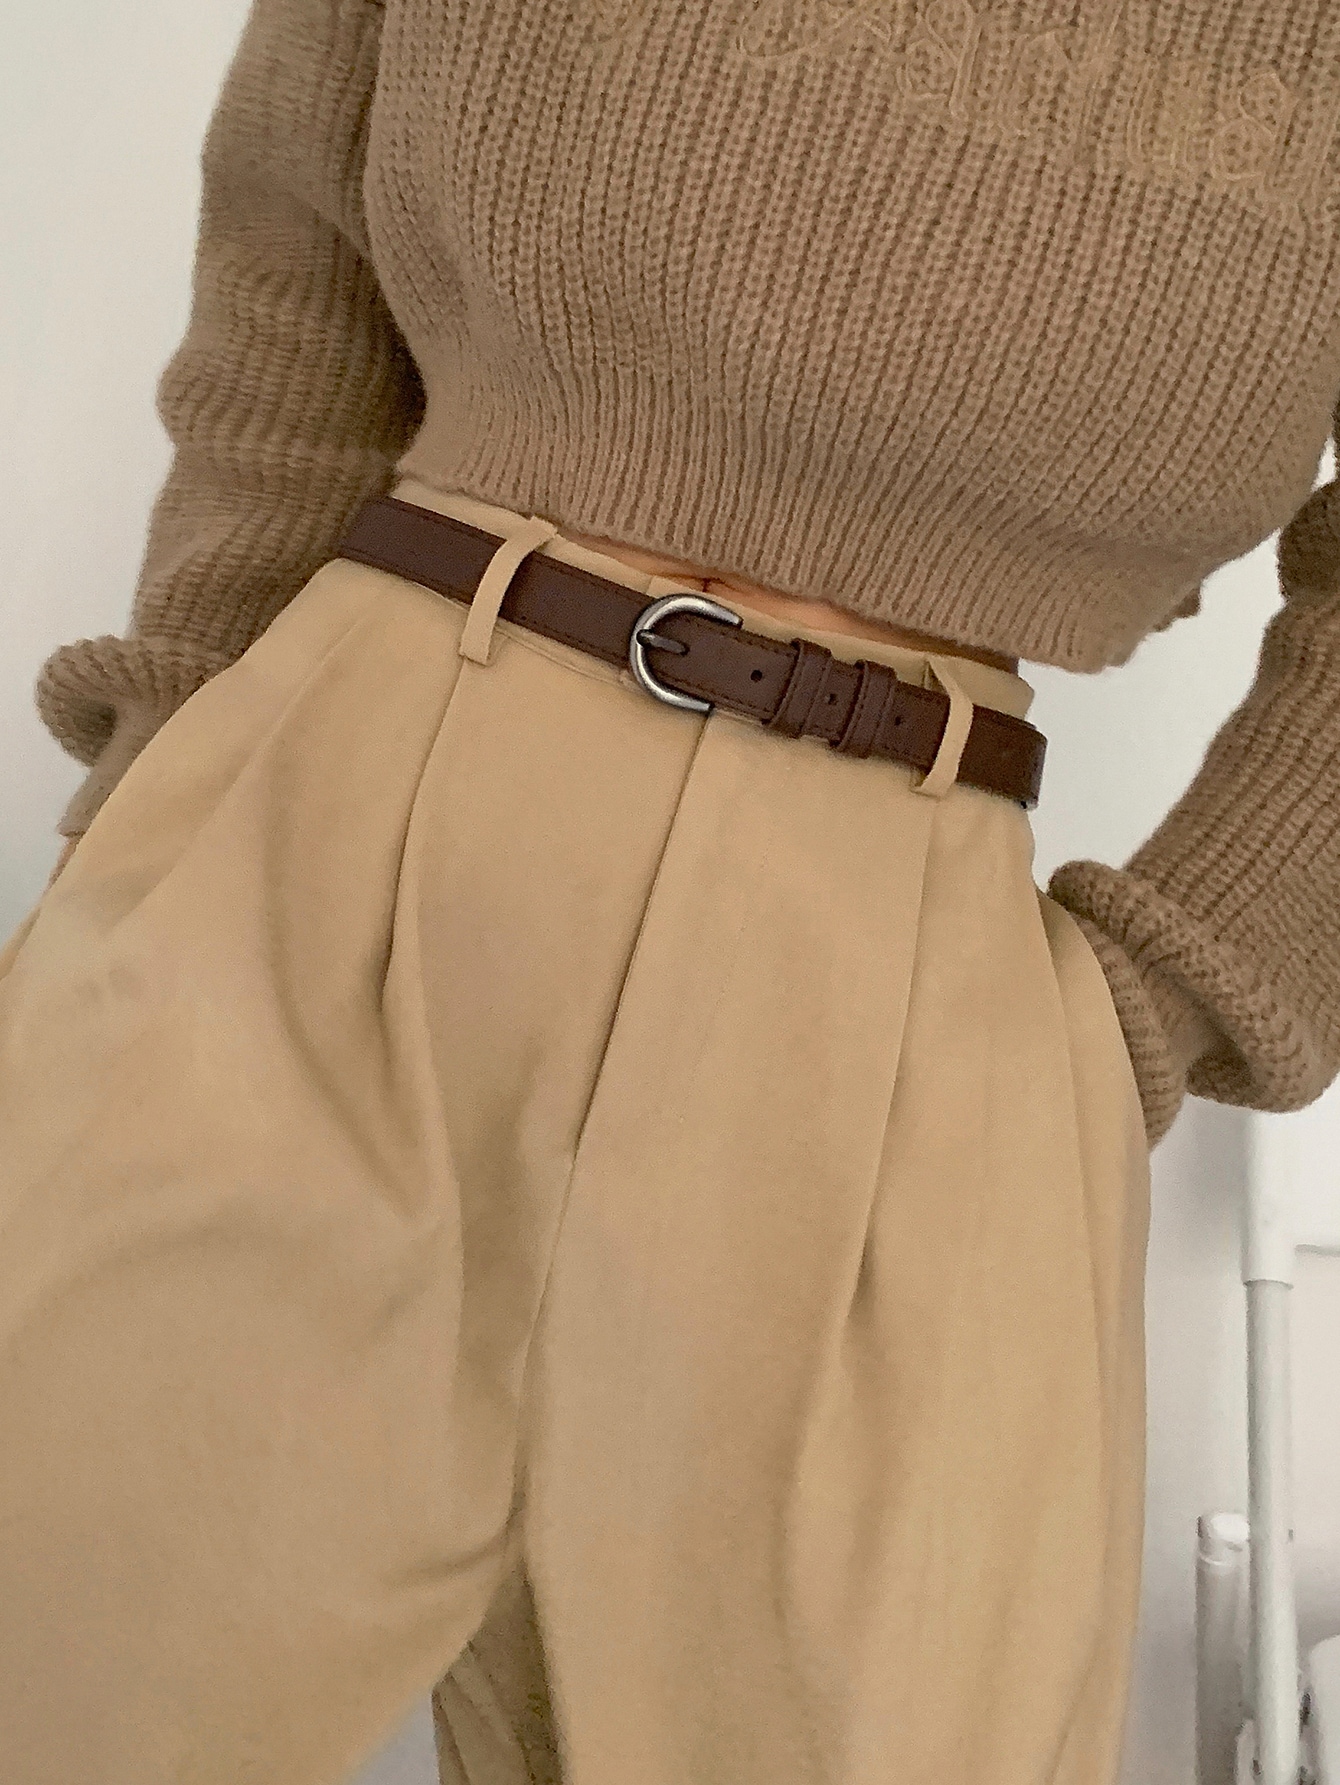 DAZY Минималистичный однотонный ремень, кофейный коричневый brown waist belt genuine leather women belt cowskin smooth buckle ladies dress belt solid brown thin female strap 103cm